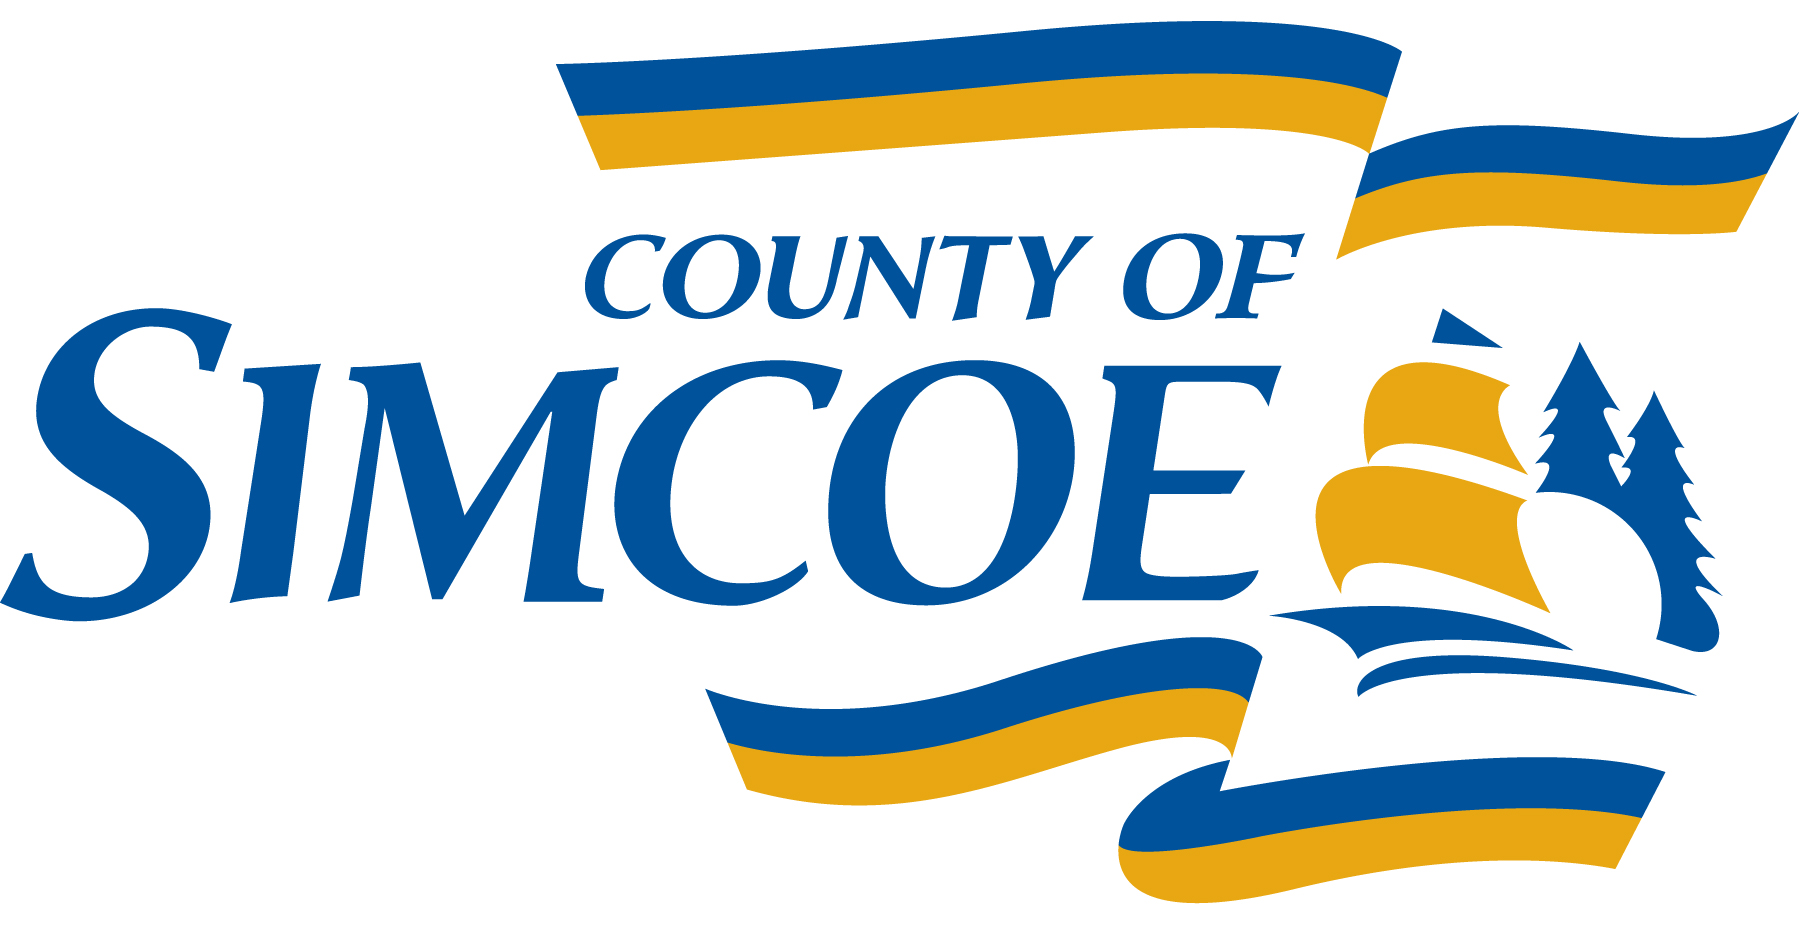 County of Simcoe logo